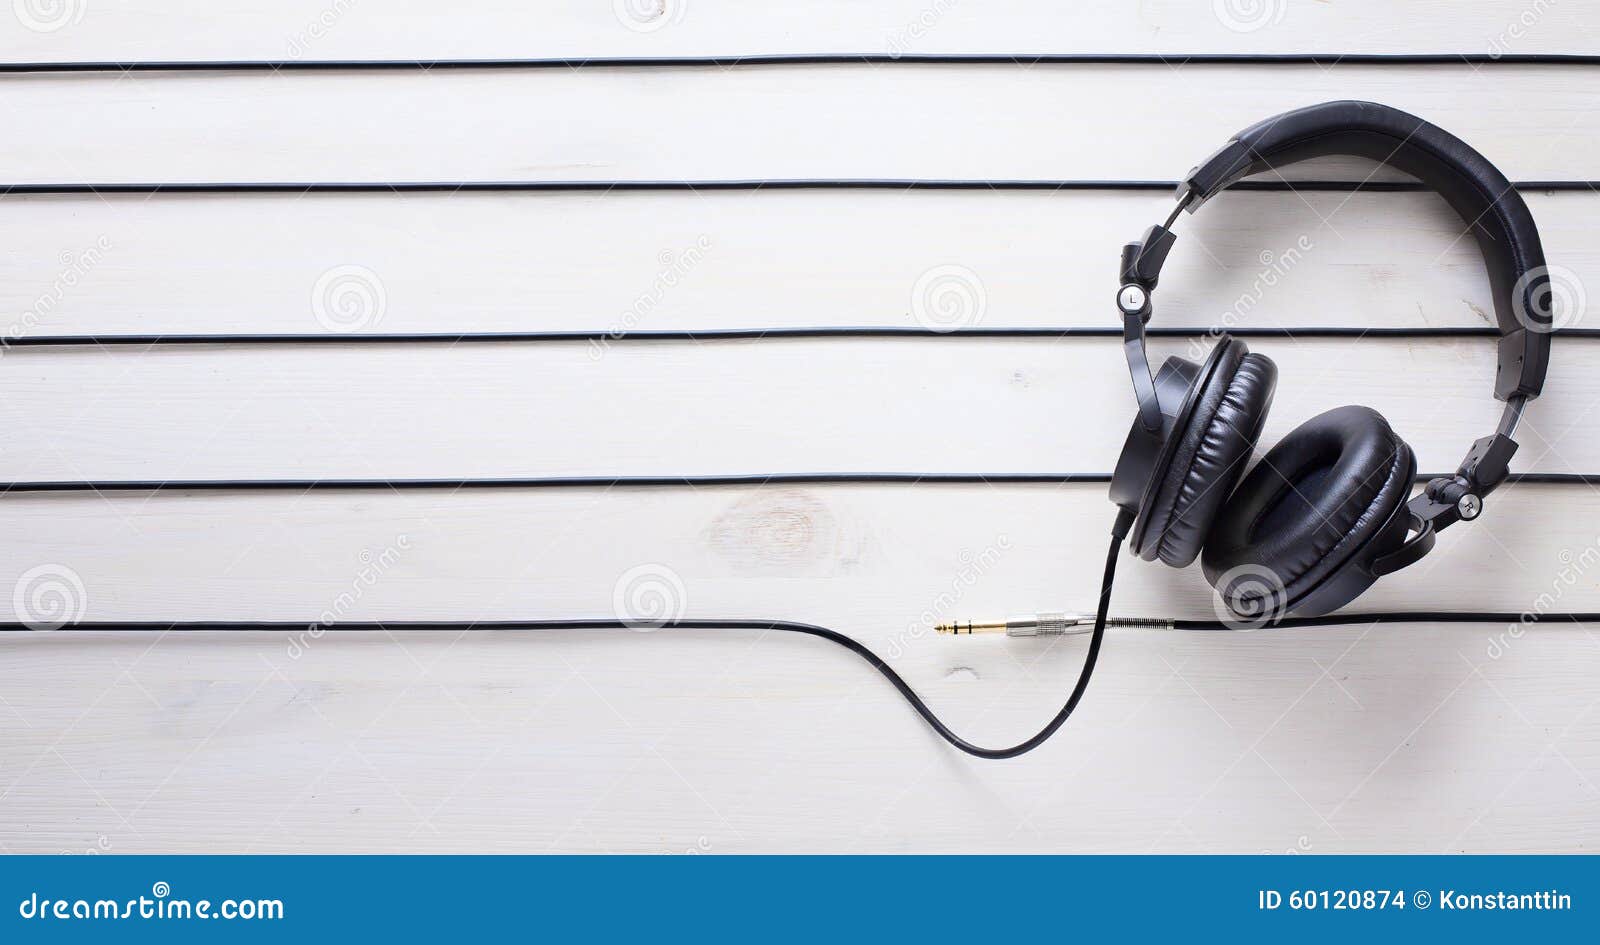 art music studio background with dj headphones